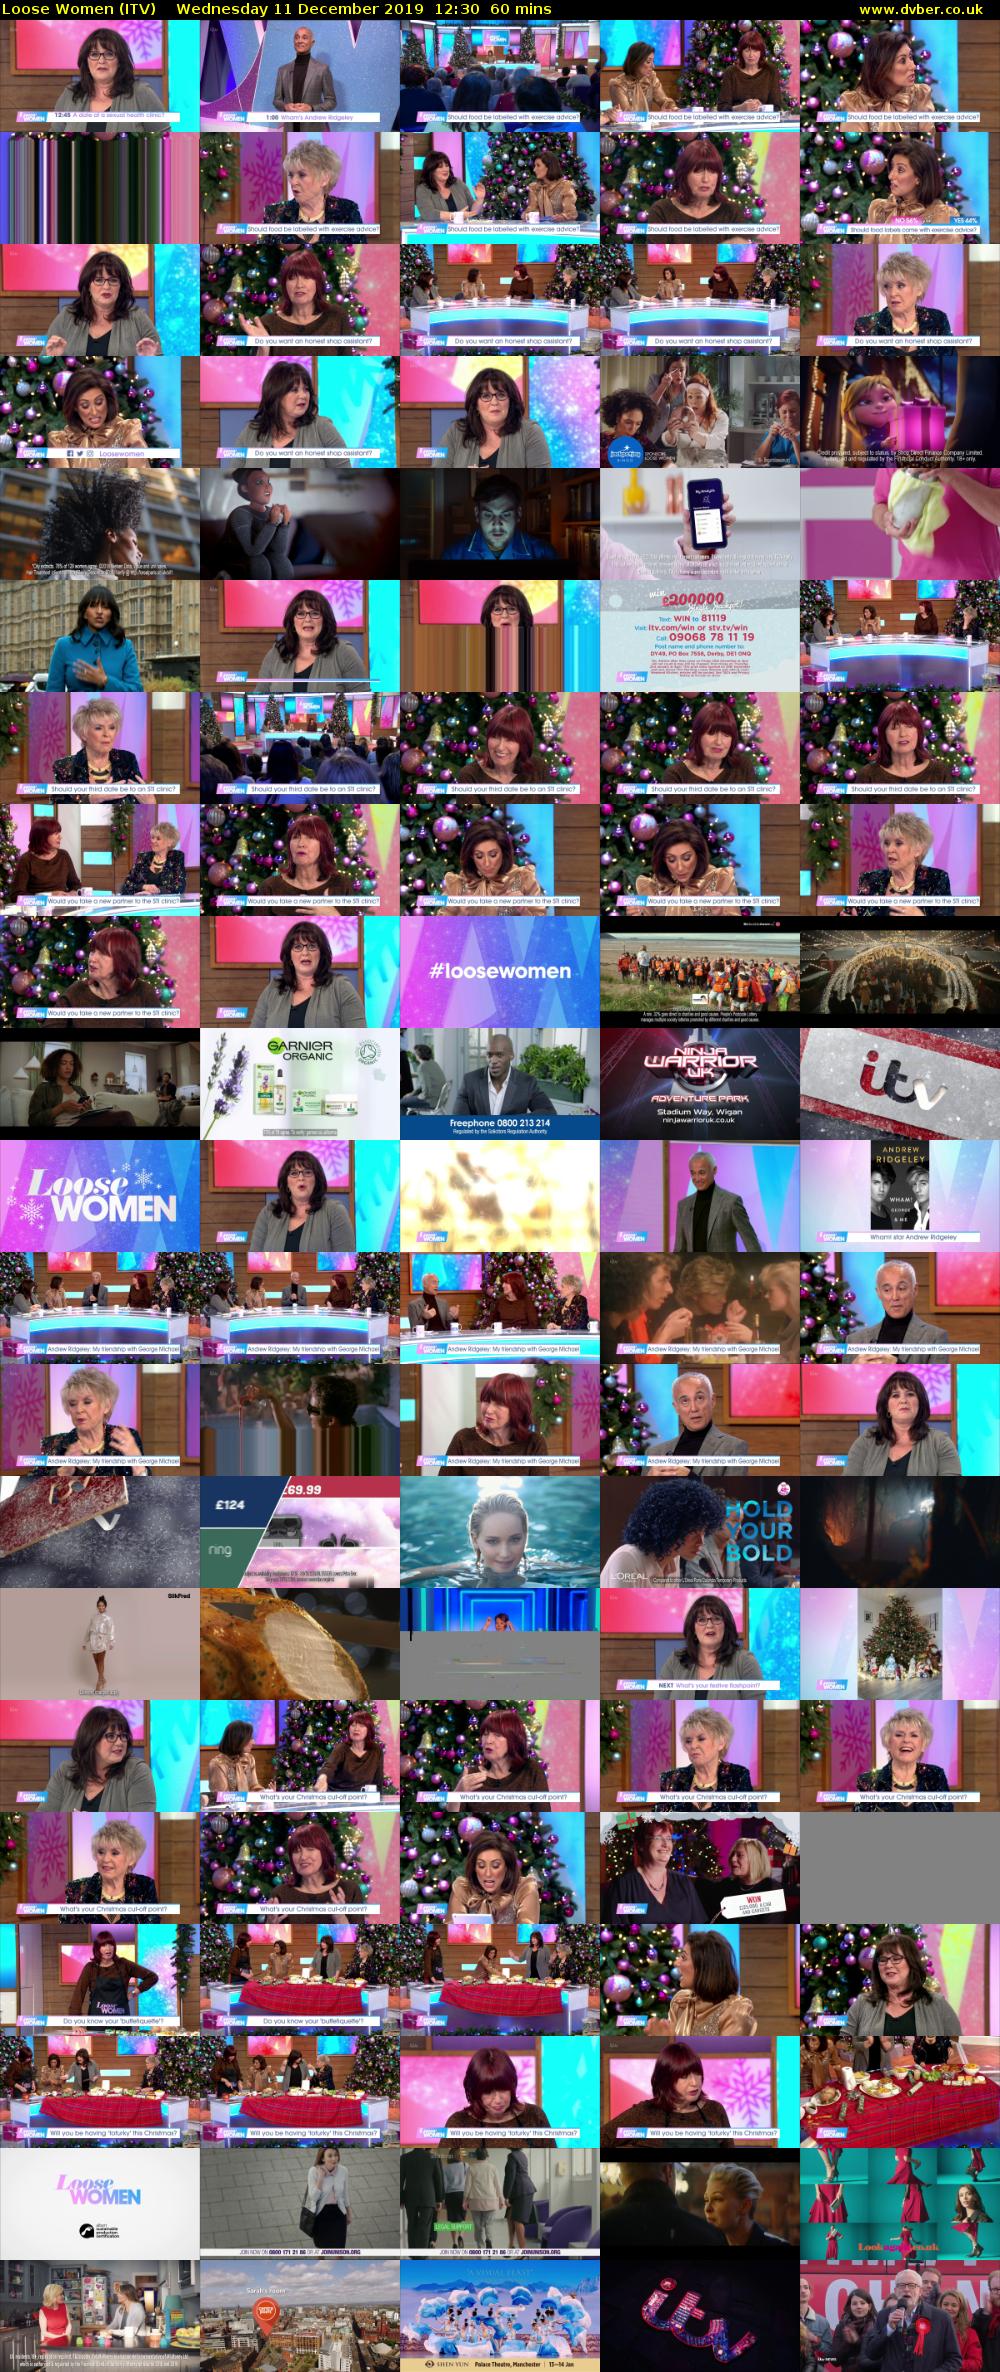 Loose Women (ITV) Wednesday 11 December 2019 12:30 - 13:30